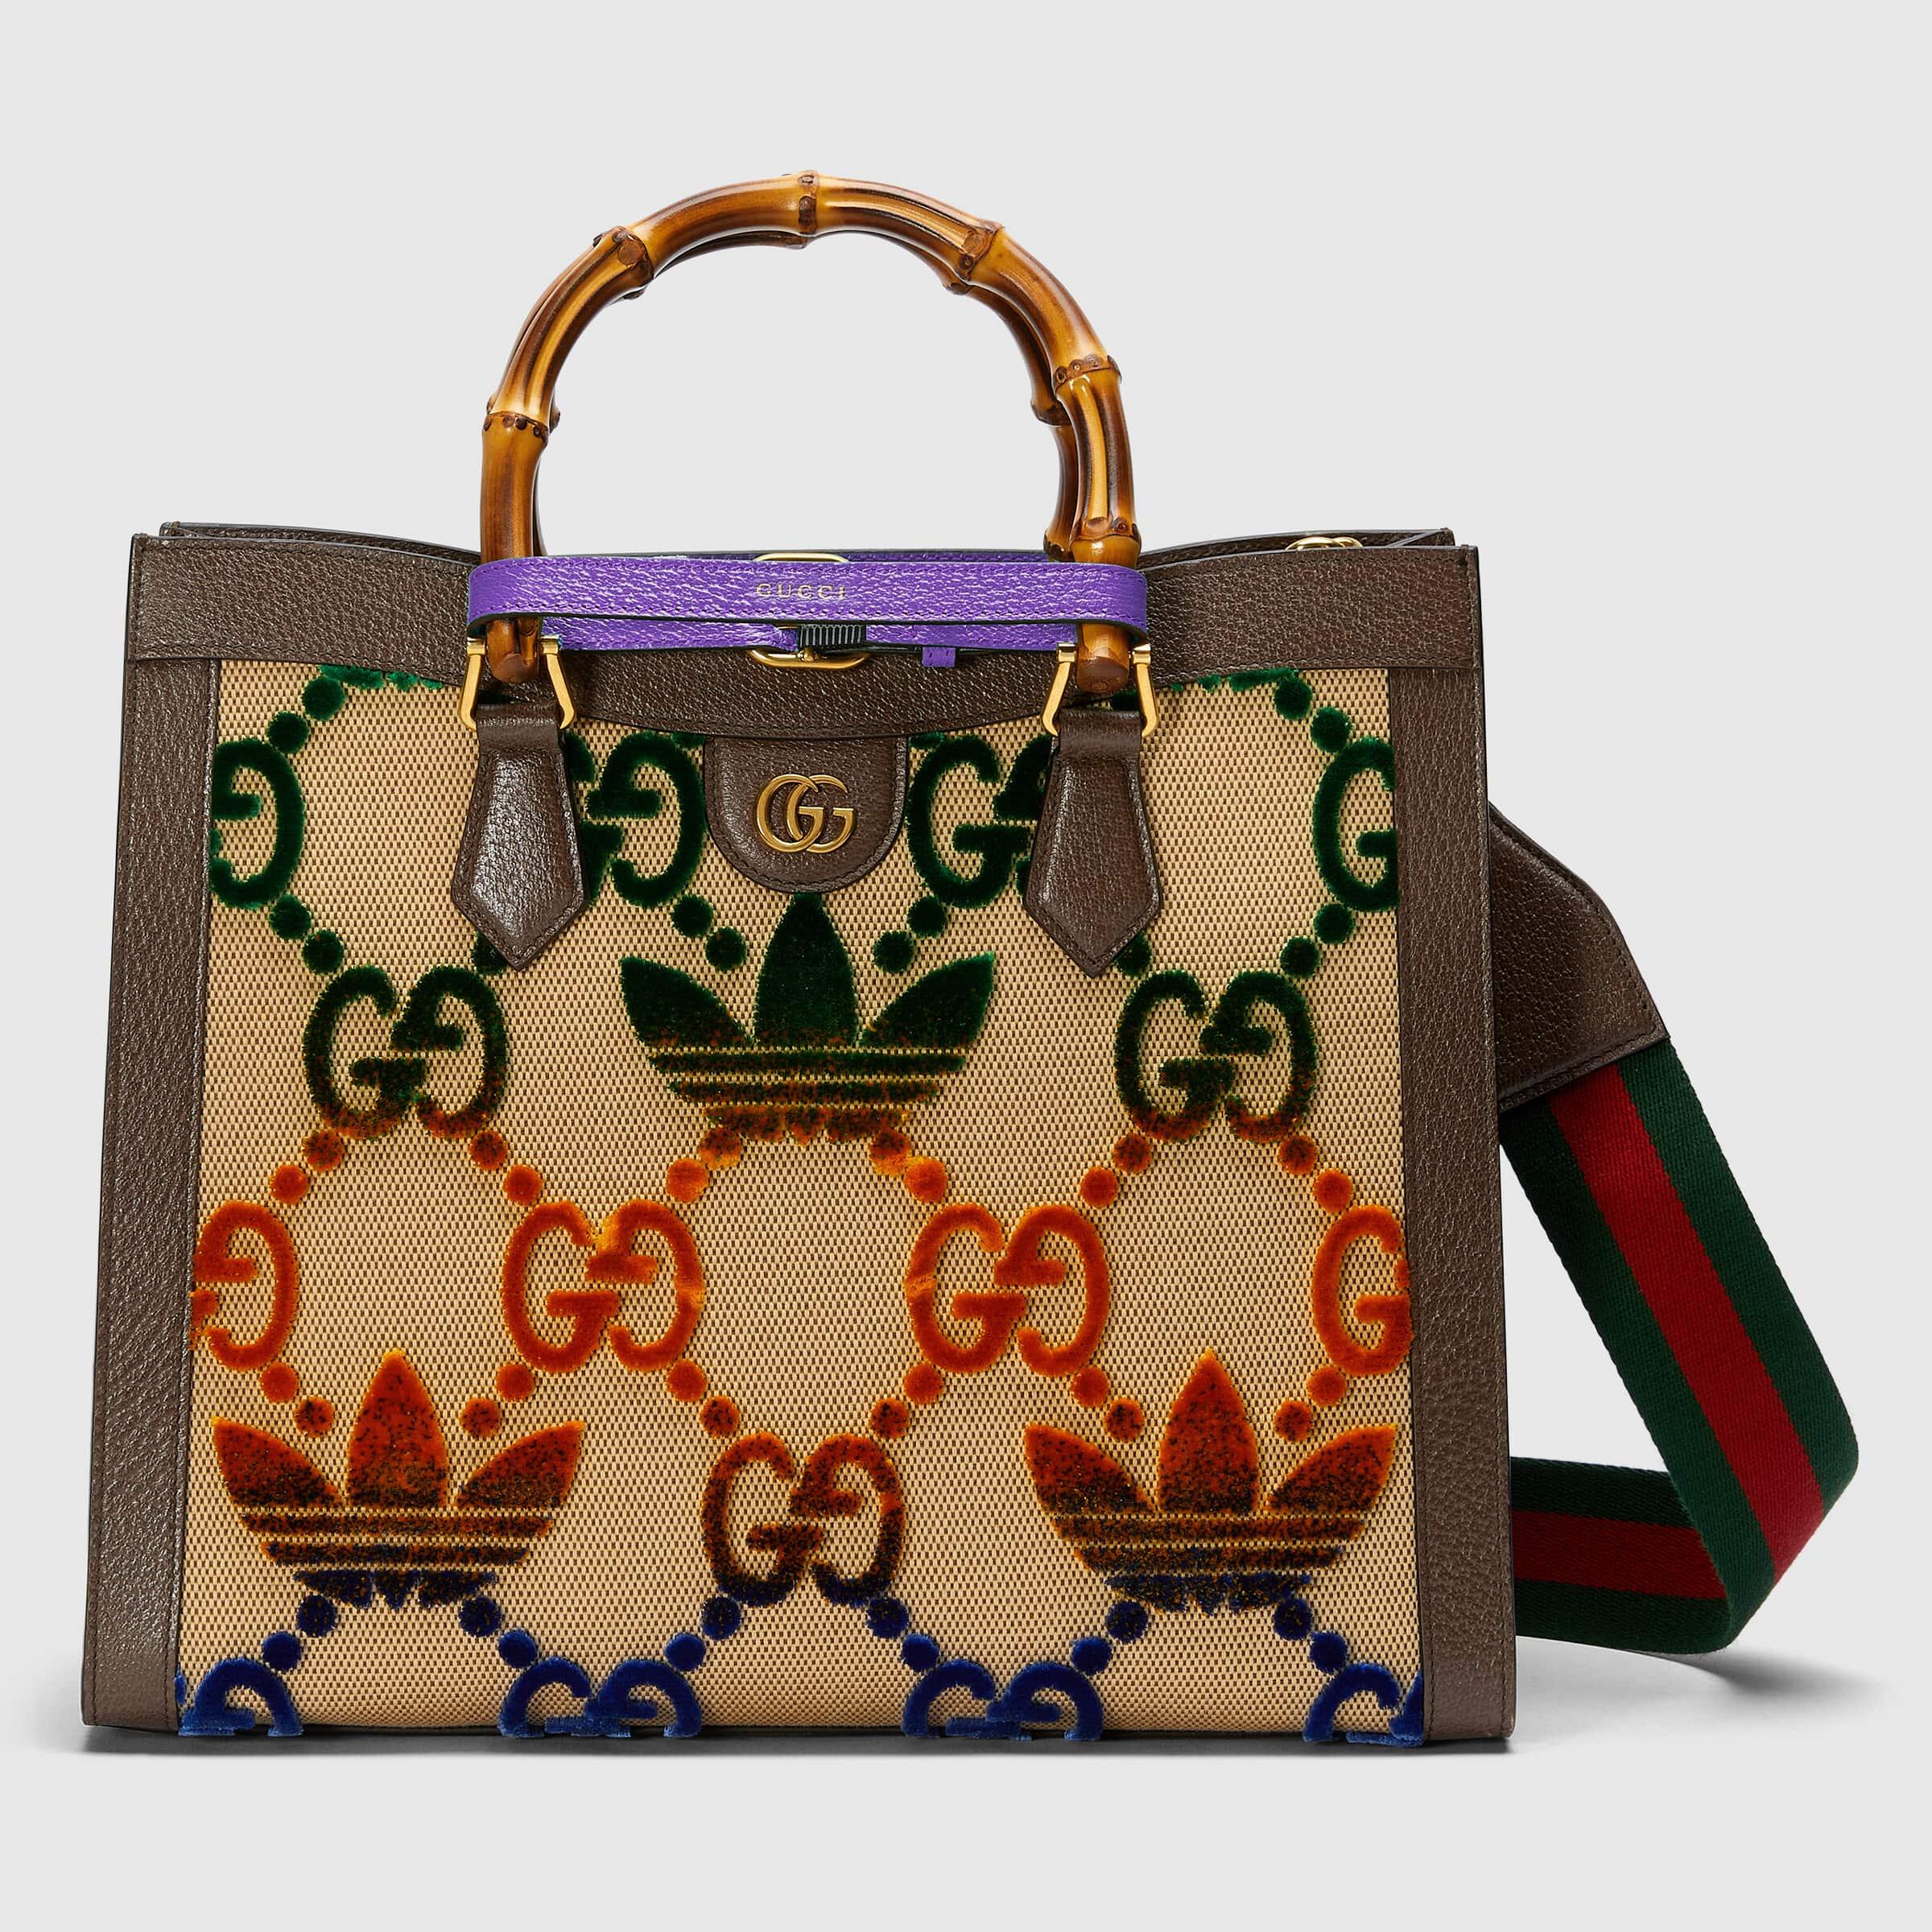 Gucci Diana medium tote bag in Brown Leather